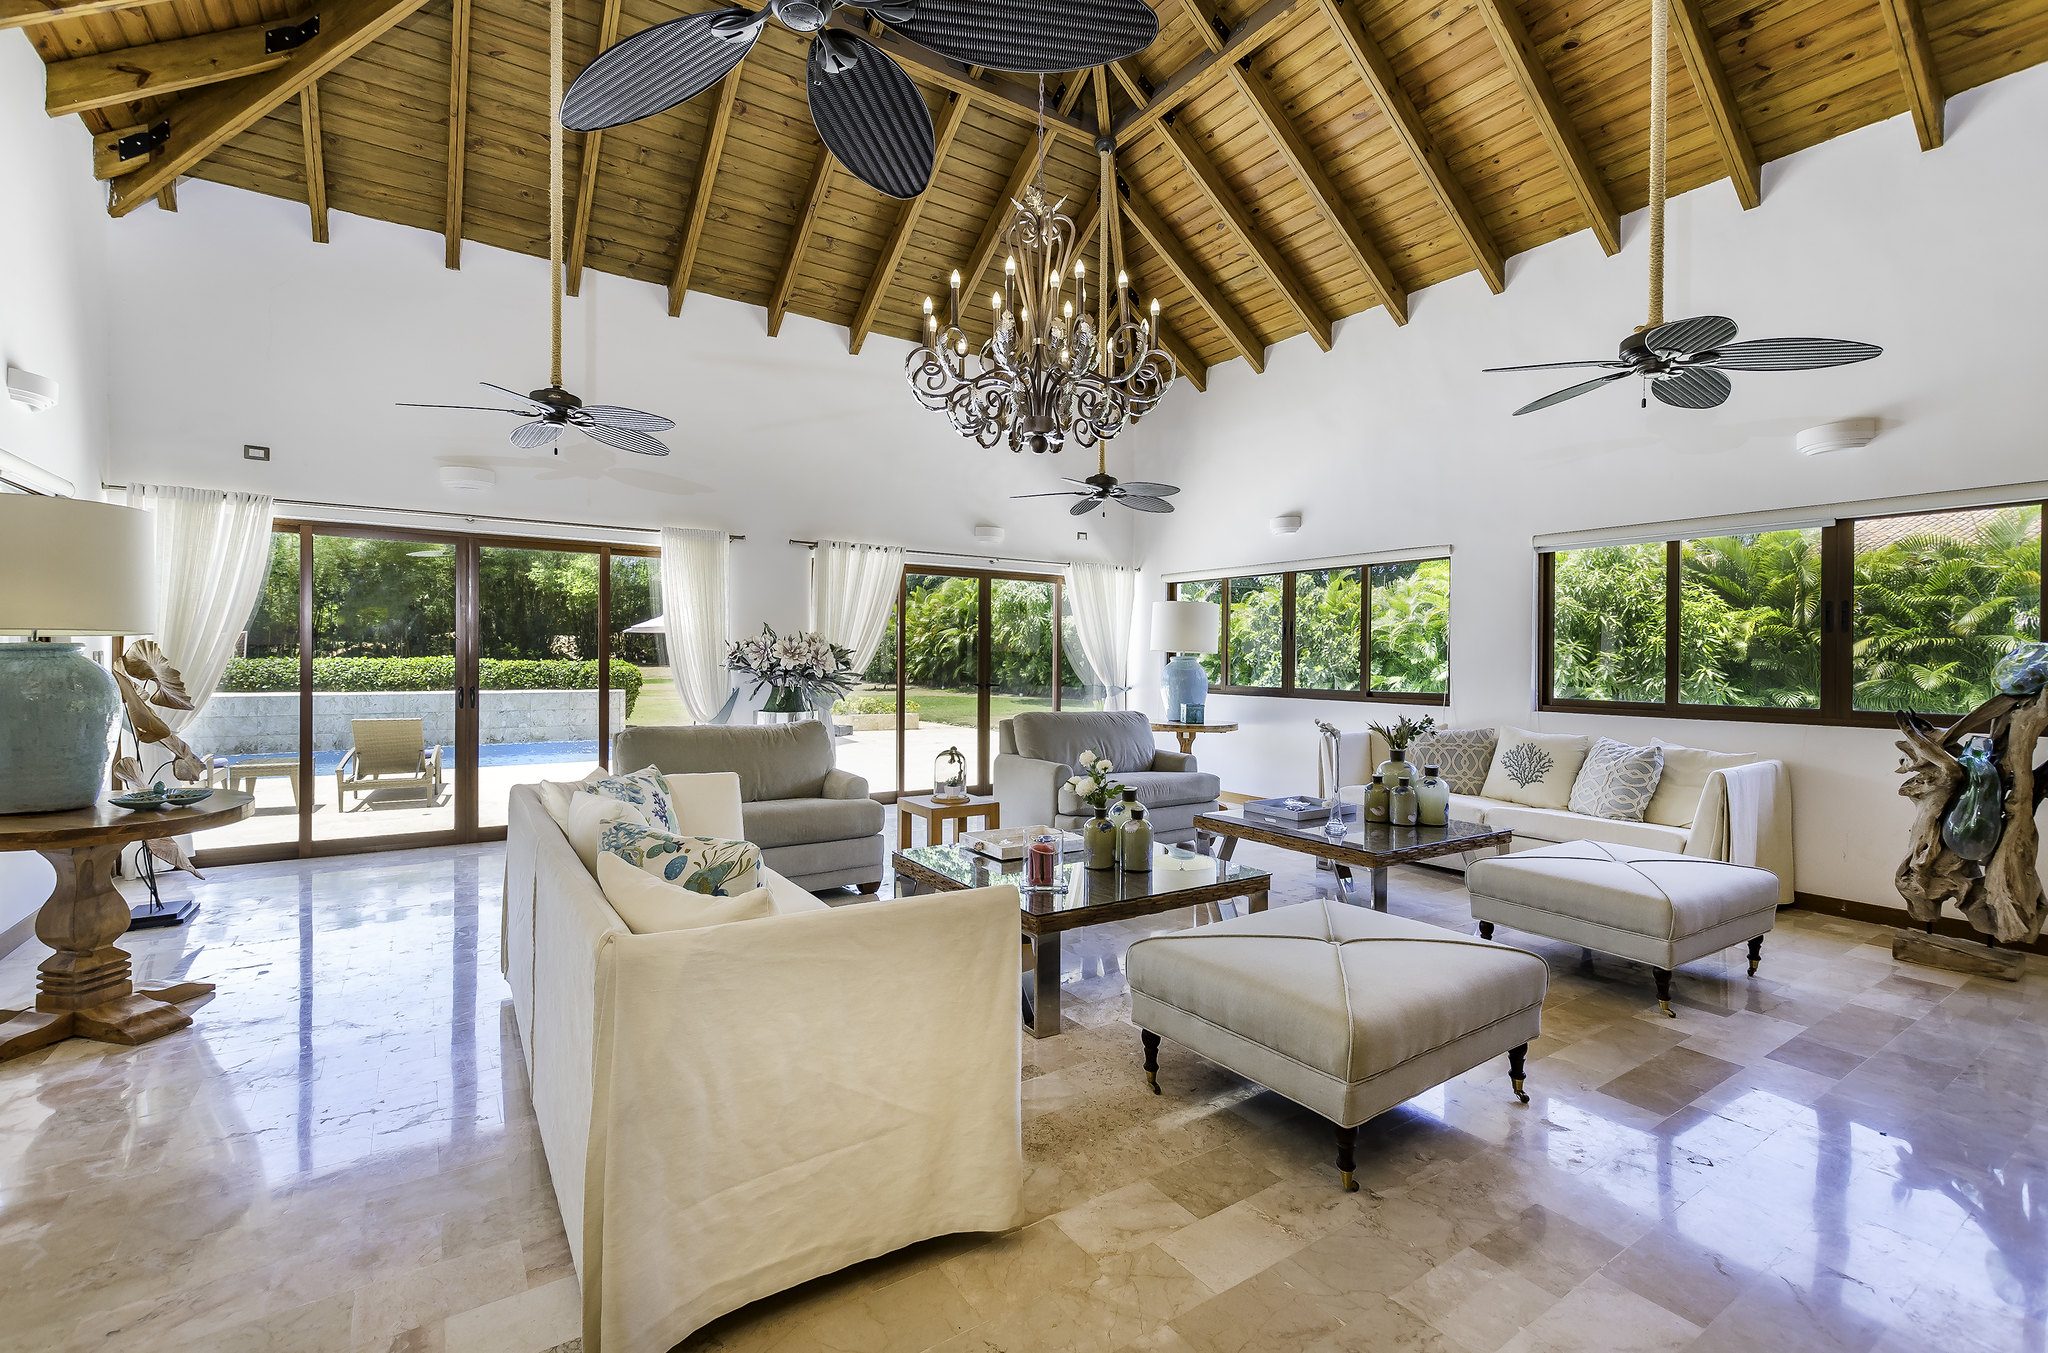 Luxurious 5-bdr villa at Casa de Campo – pool, jacuzzi, games, hibachi, staff 3